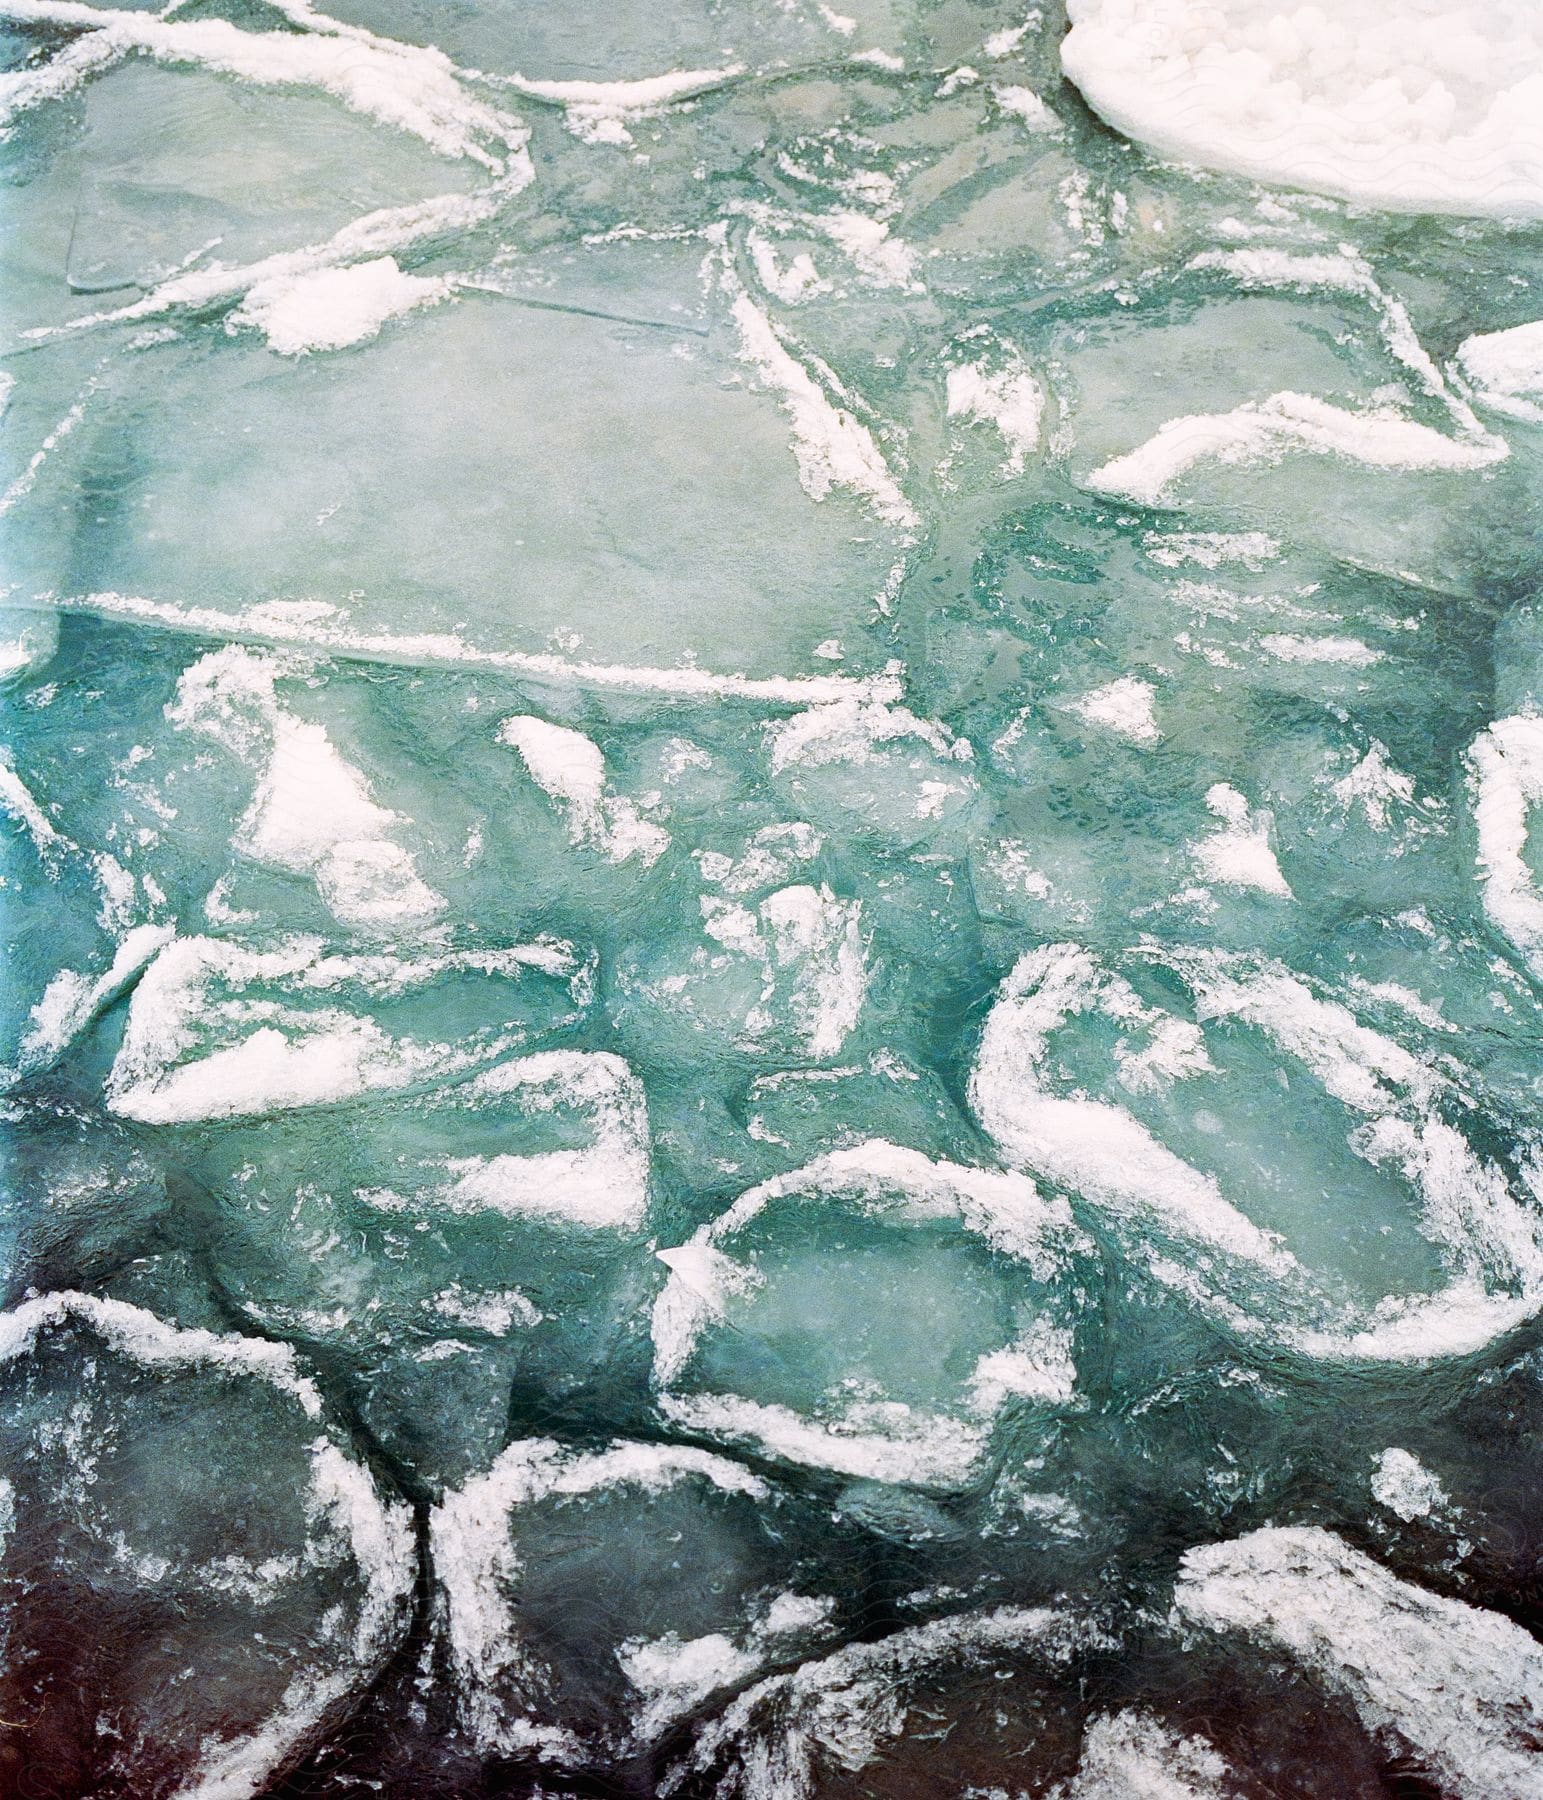 Ice floating in the ocean